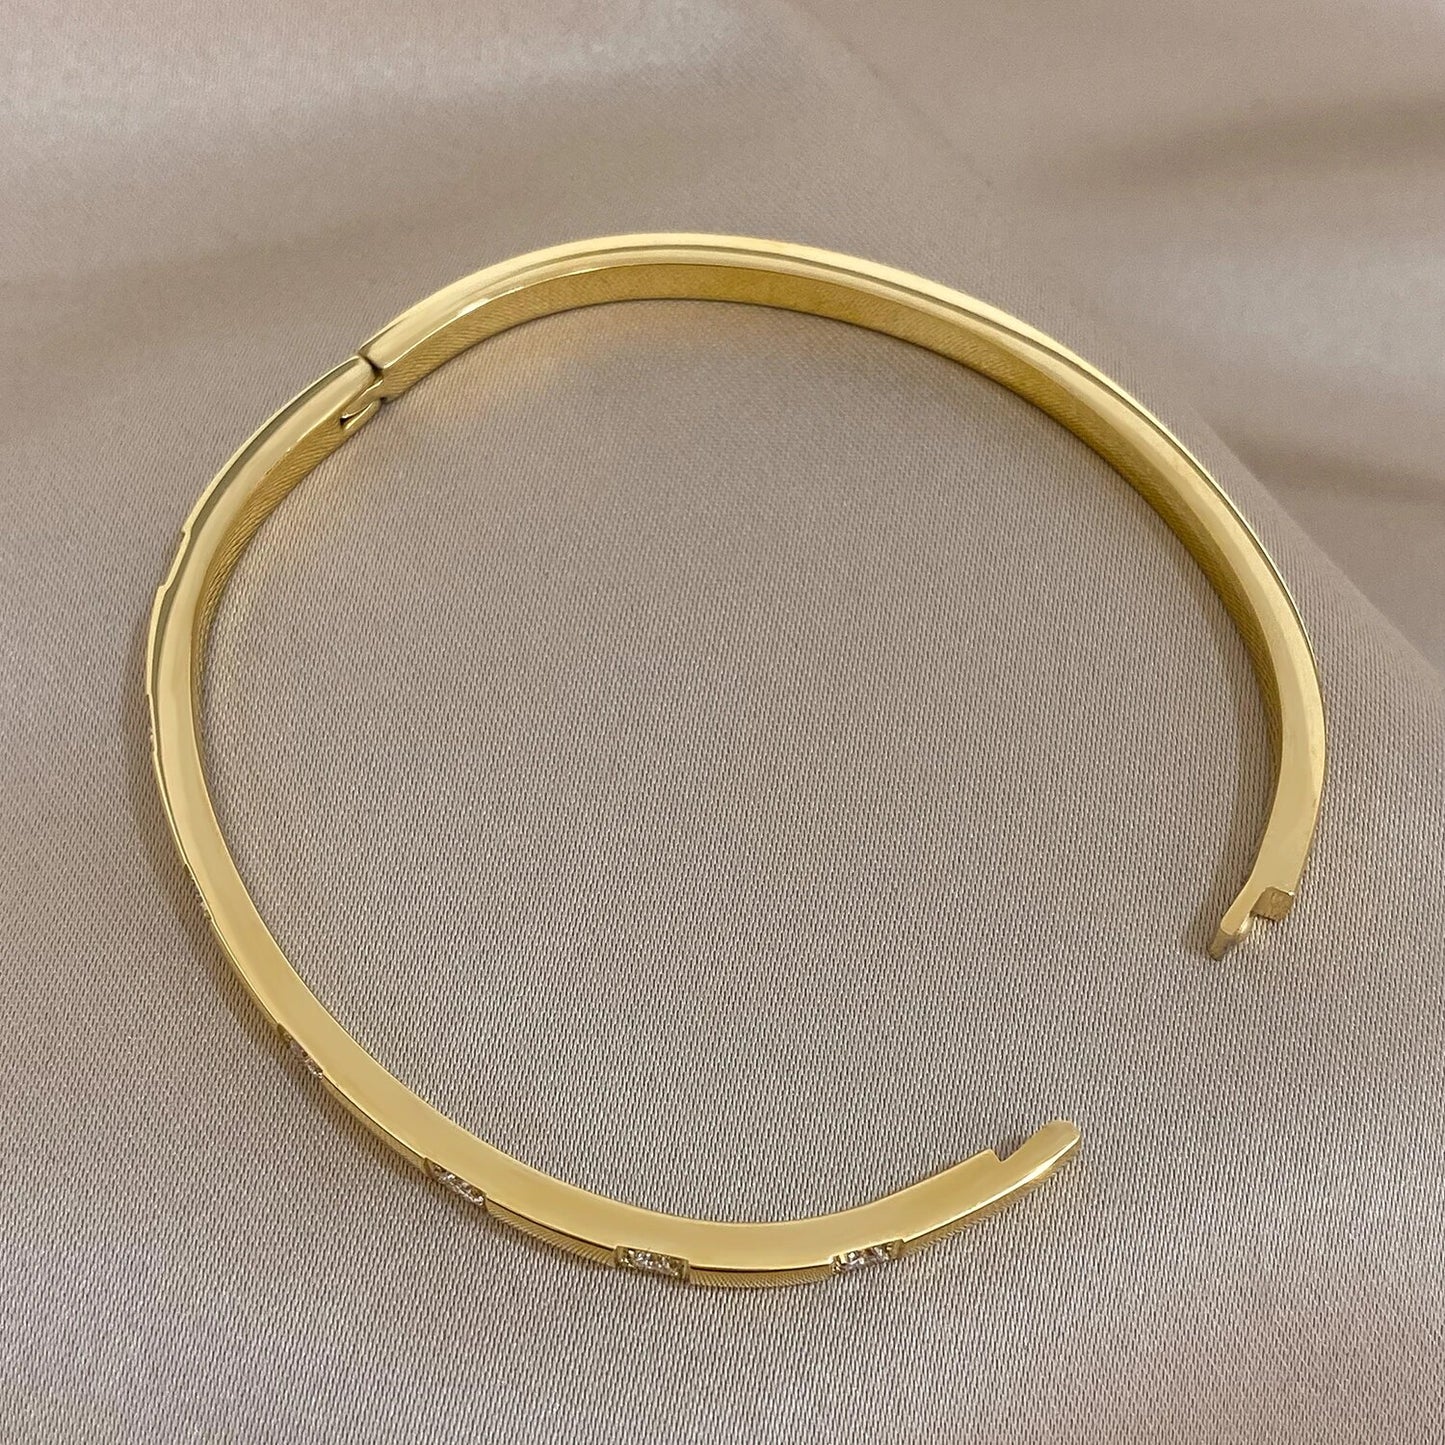 Bracelets with zirconia inlaid in steel